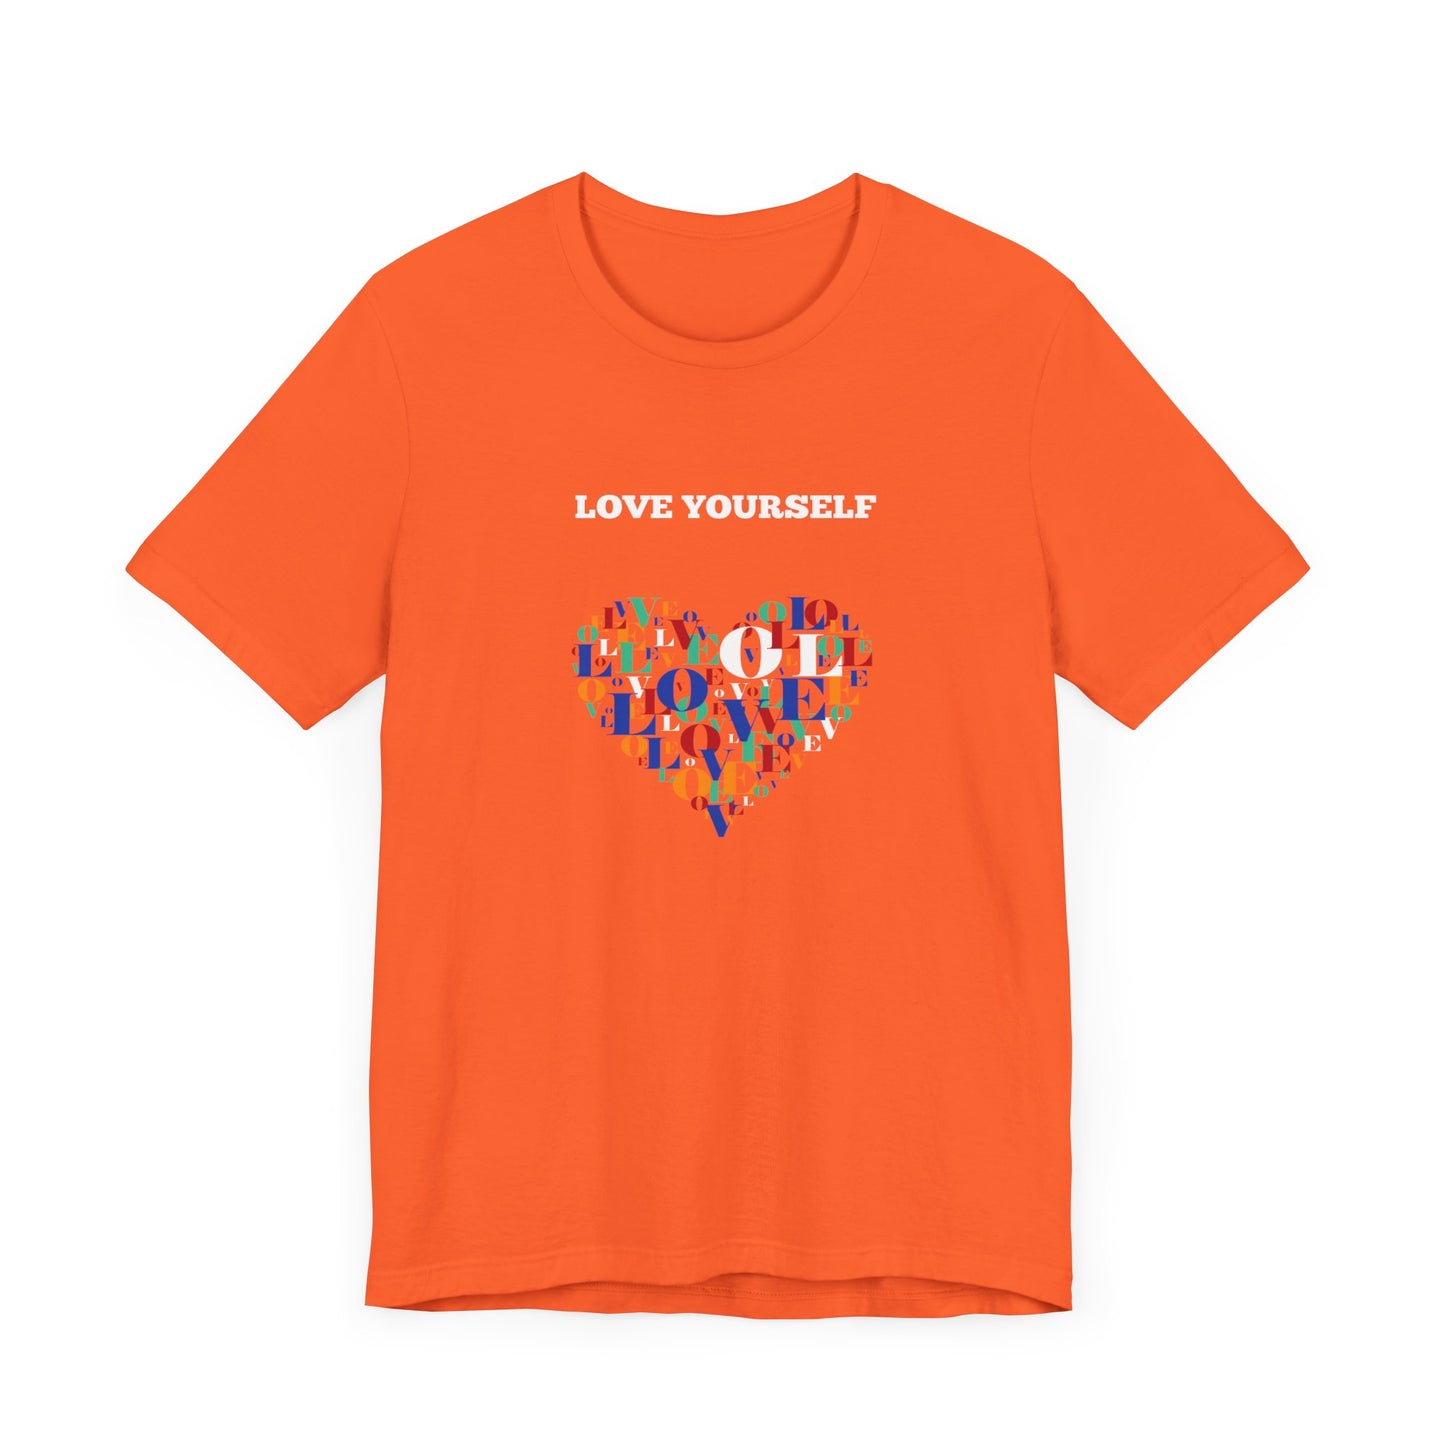 Love Yourself. Unisex Jersey Short Sleeve Tee